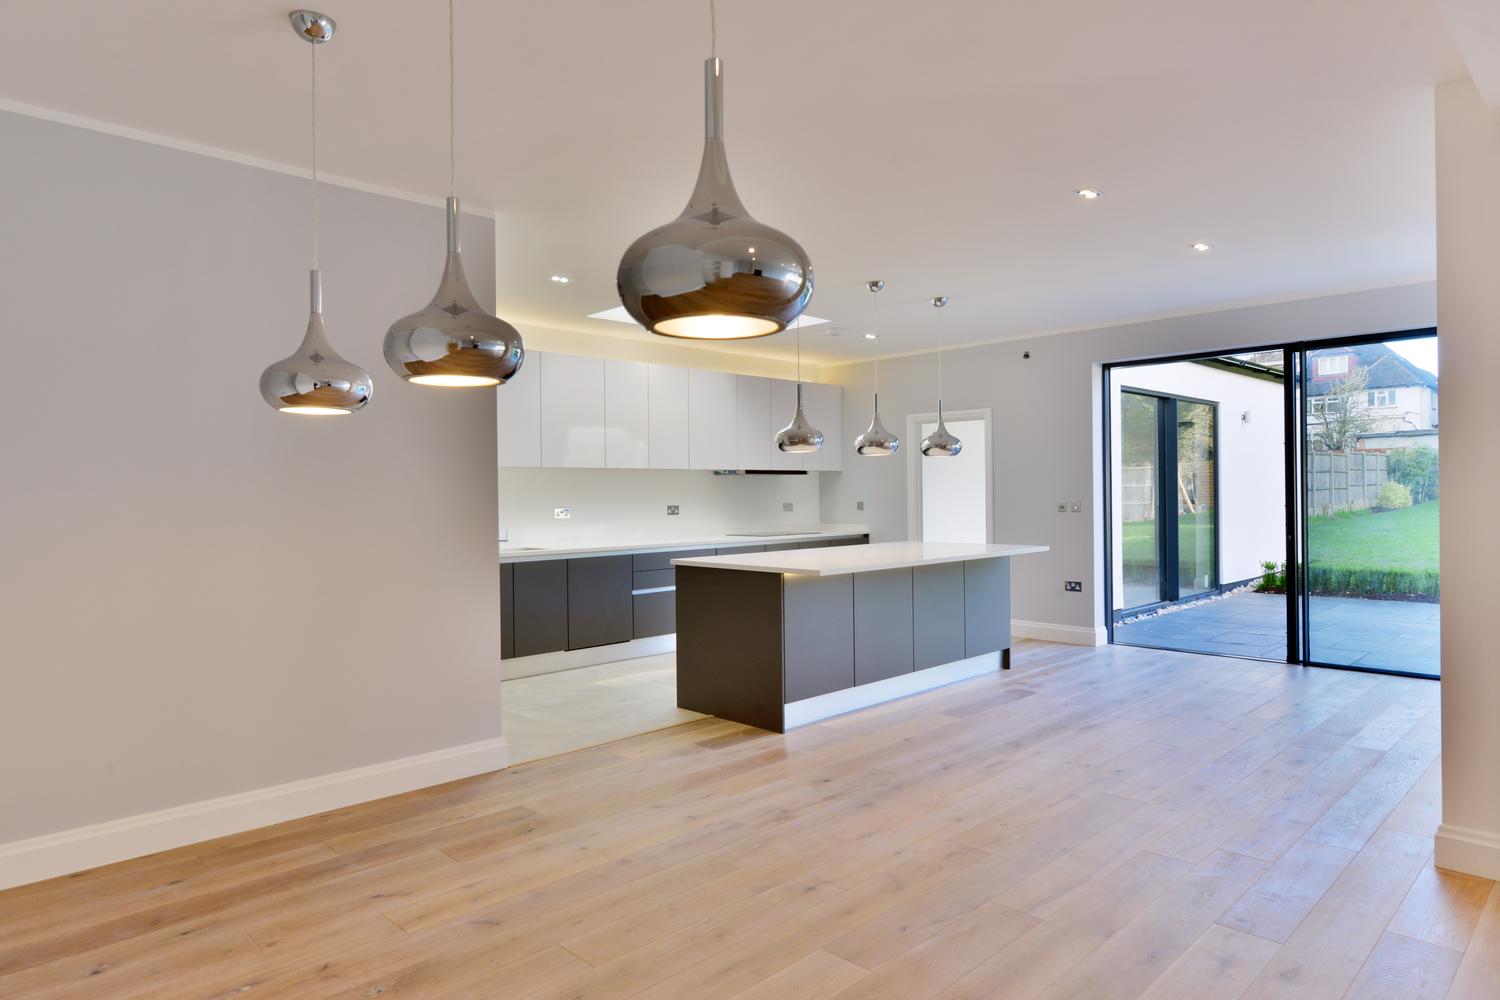 handleless kitchen design with vertical lightening